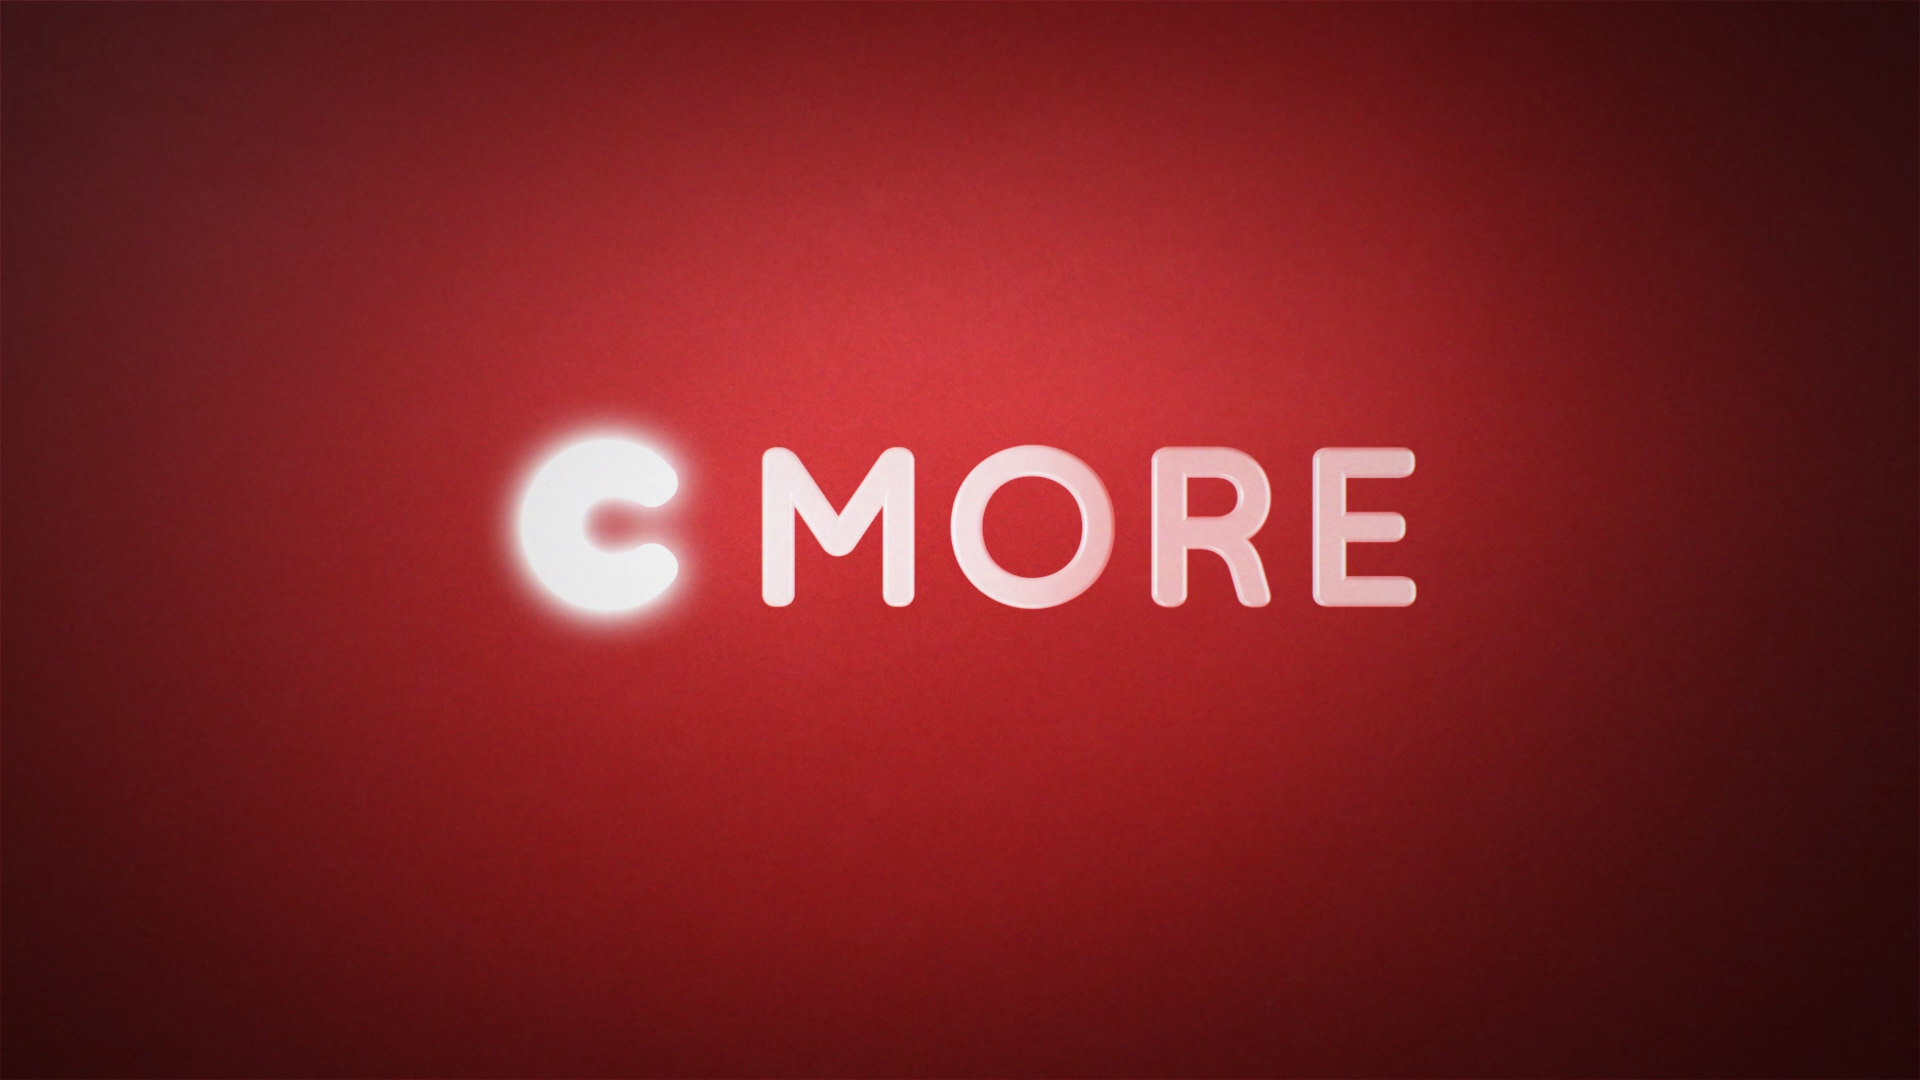 C more play. More TV. More TV logo. 1more лого. One more International лого.